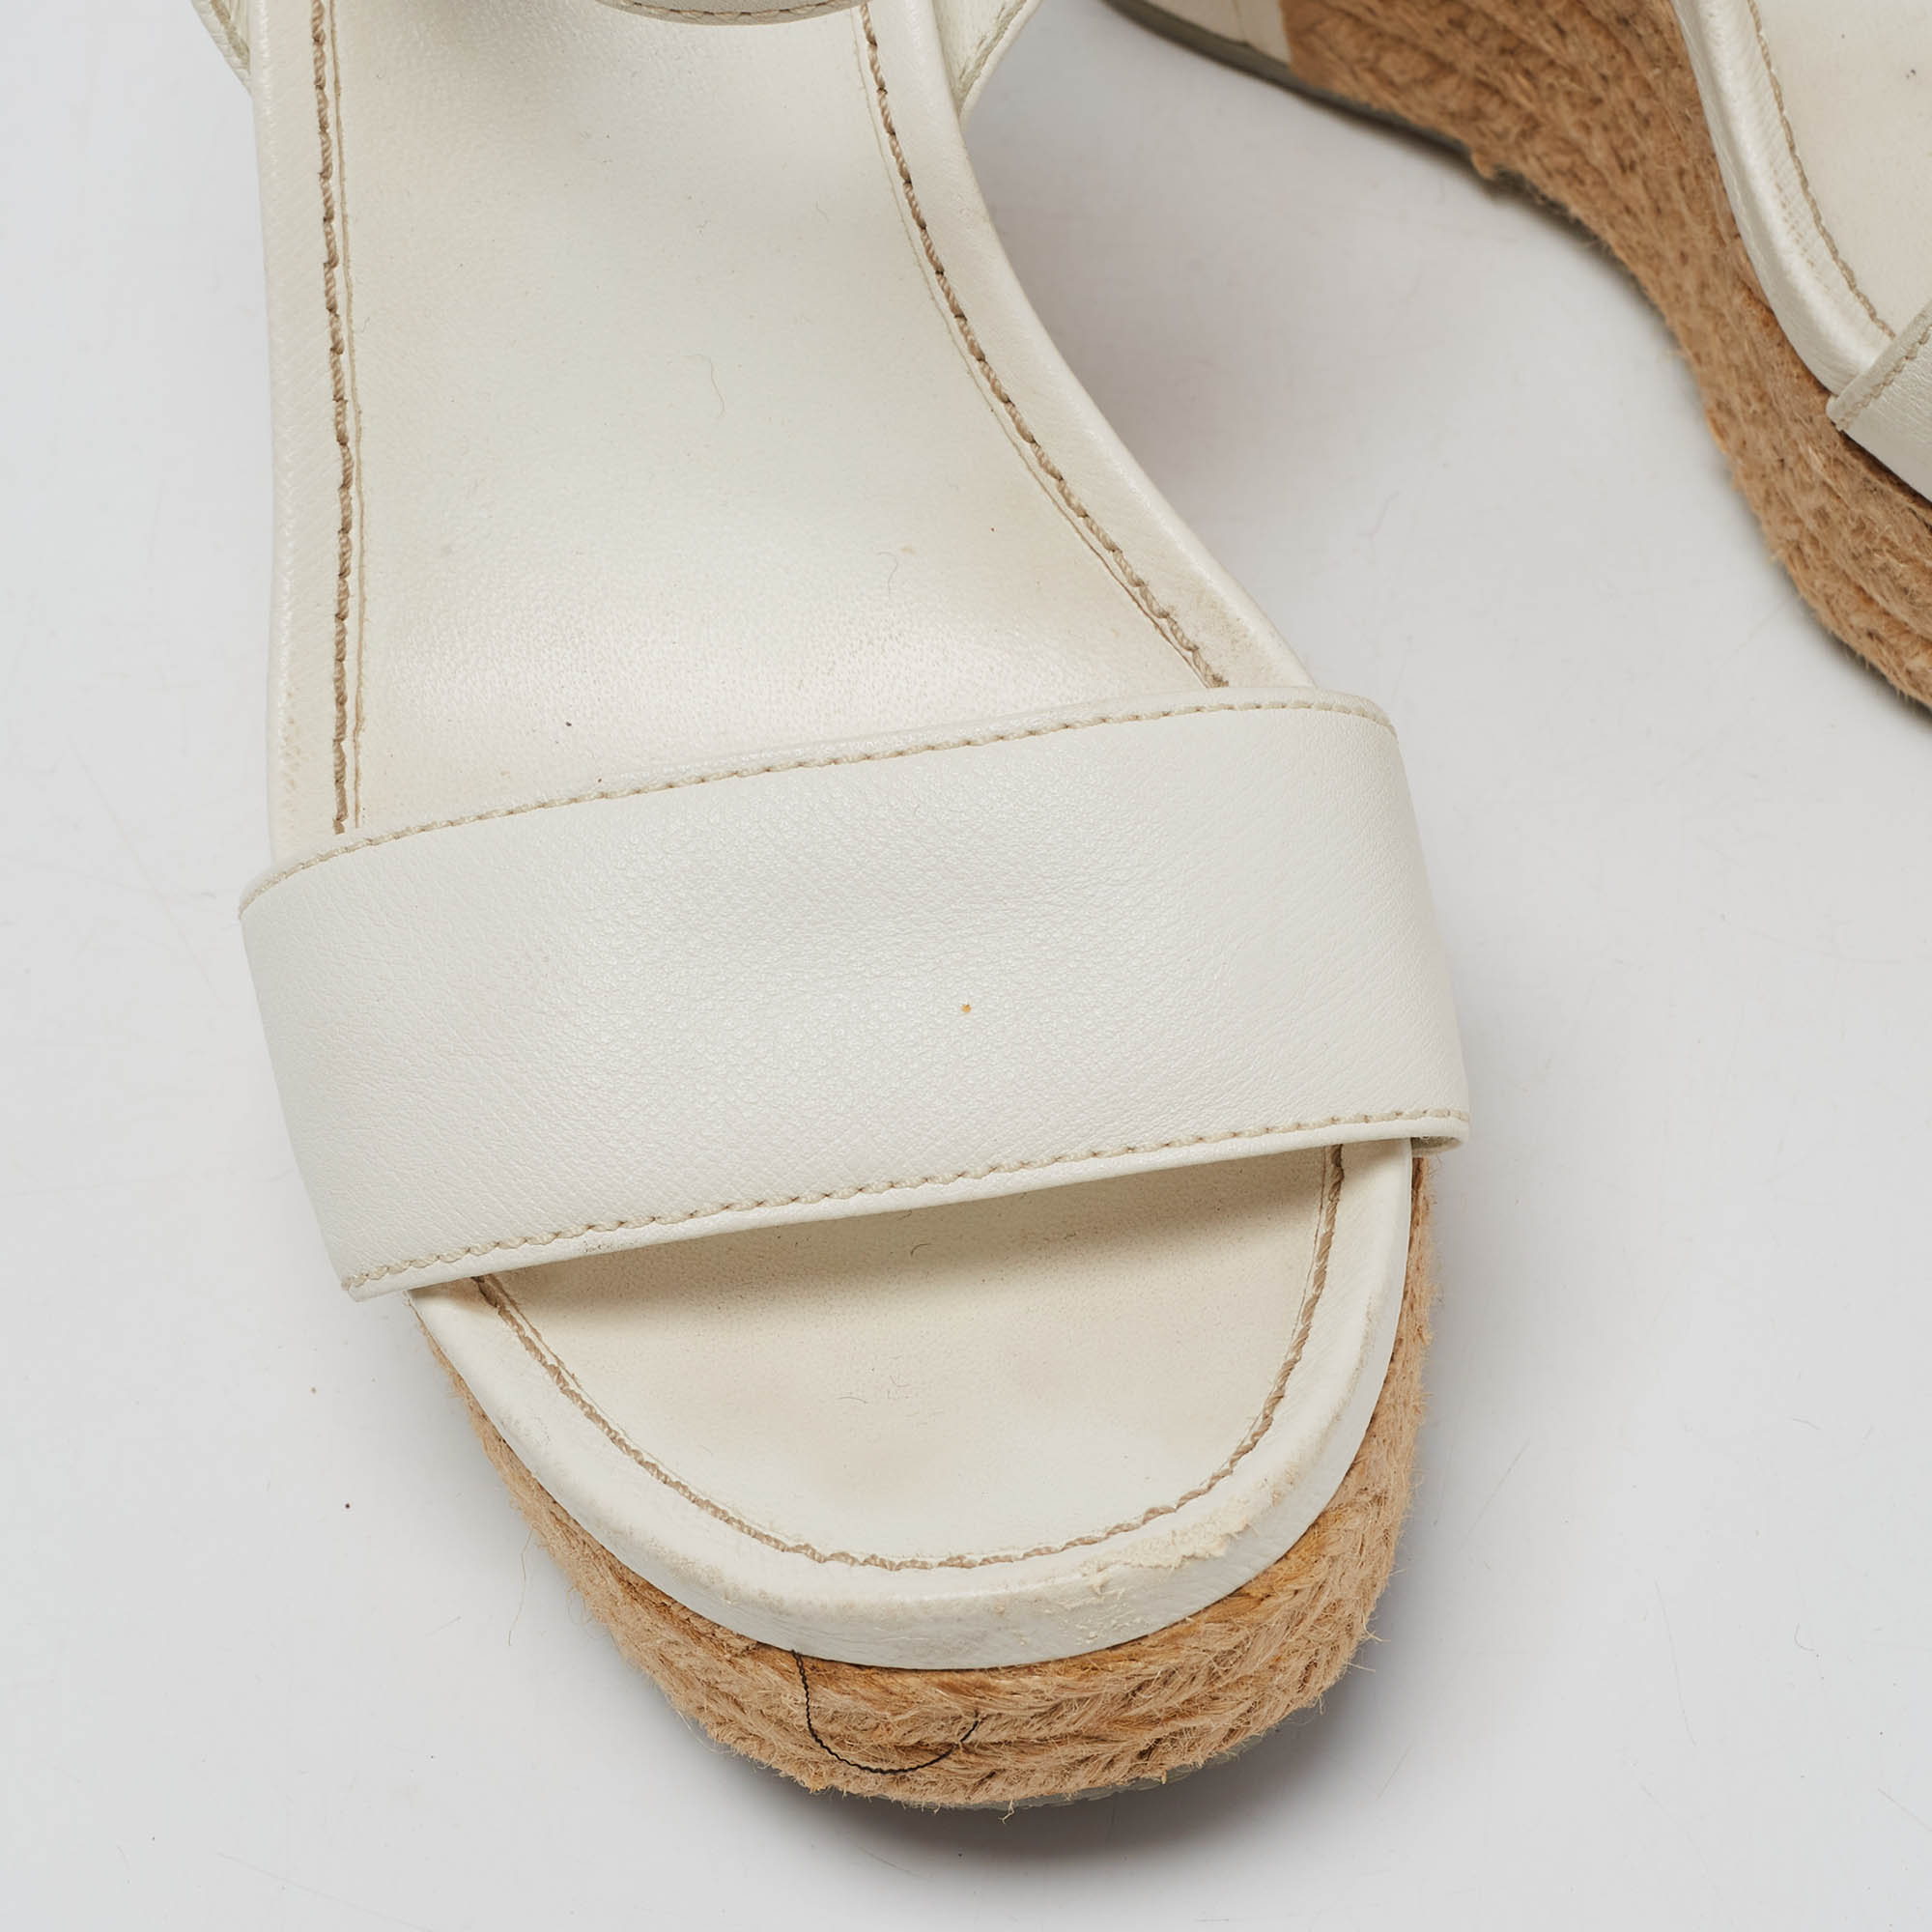 Prada Sport White Leather Espadrille Platform Wedge Sandals Size 38